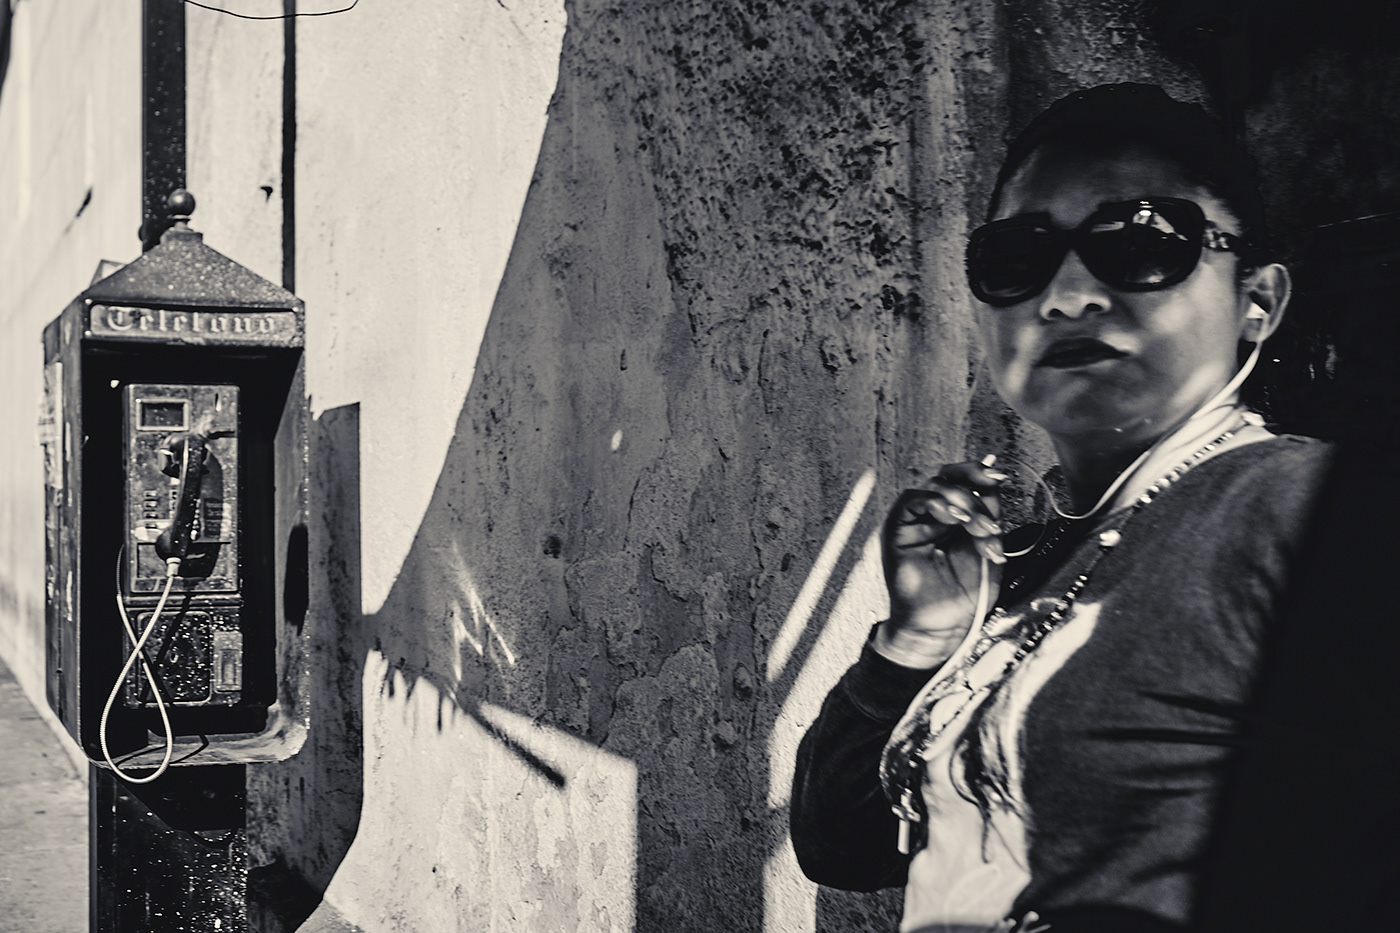 mexico matt mawson black and white Street Photography  Documentary  monochrome